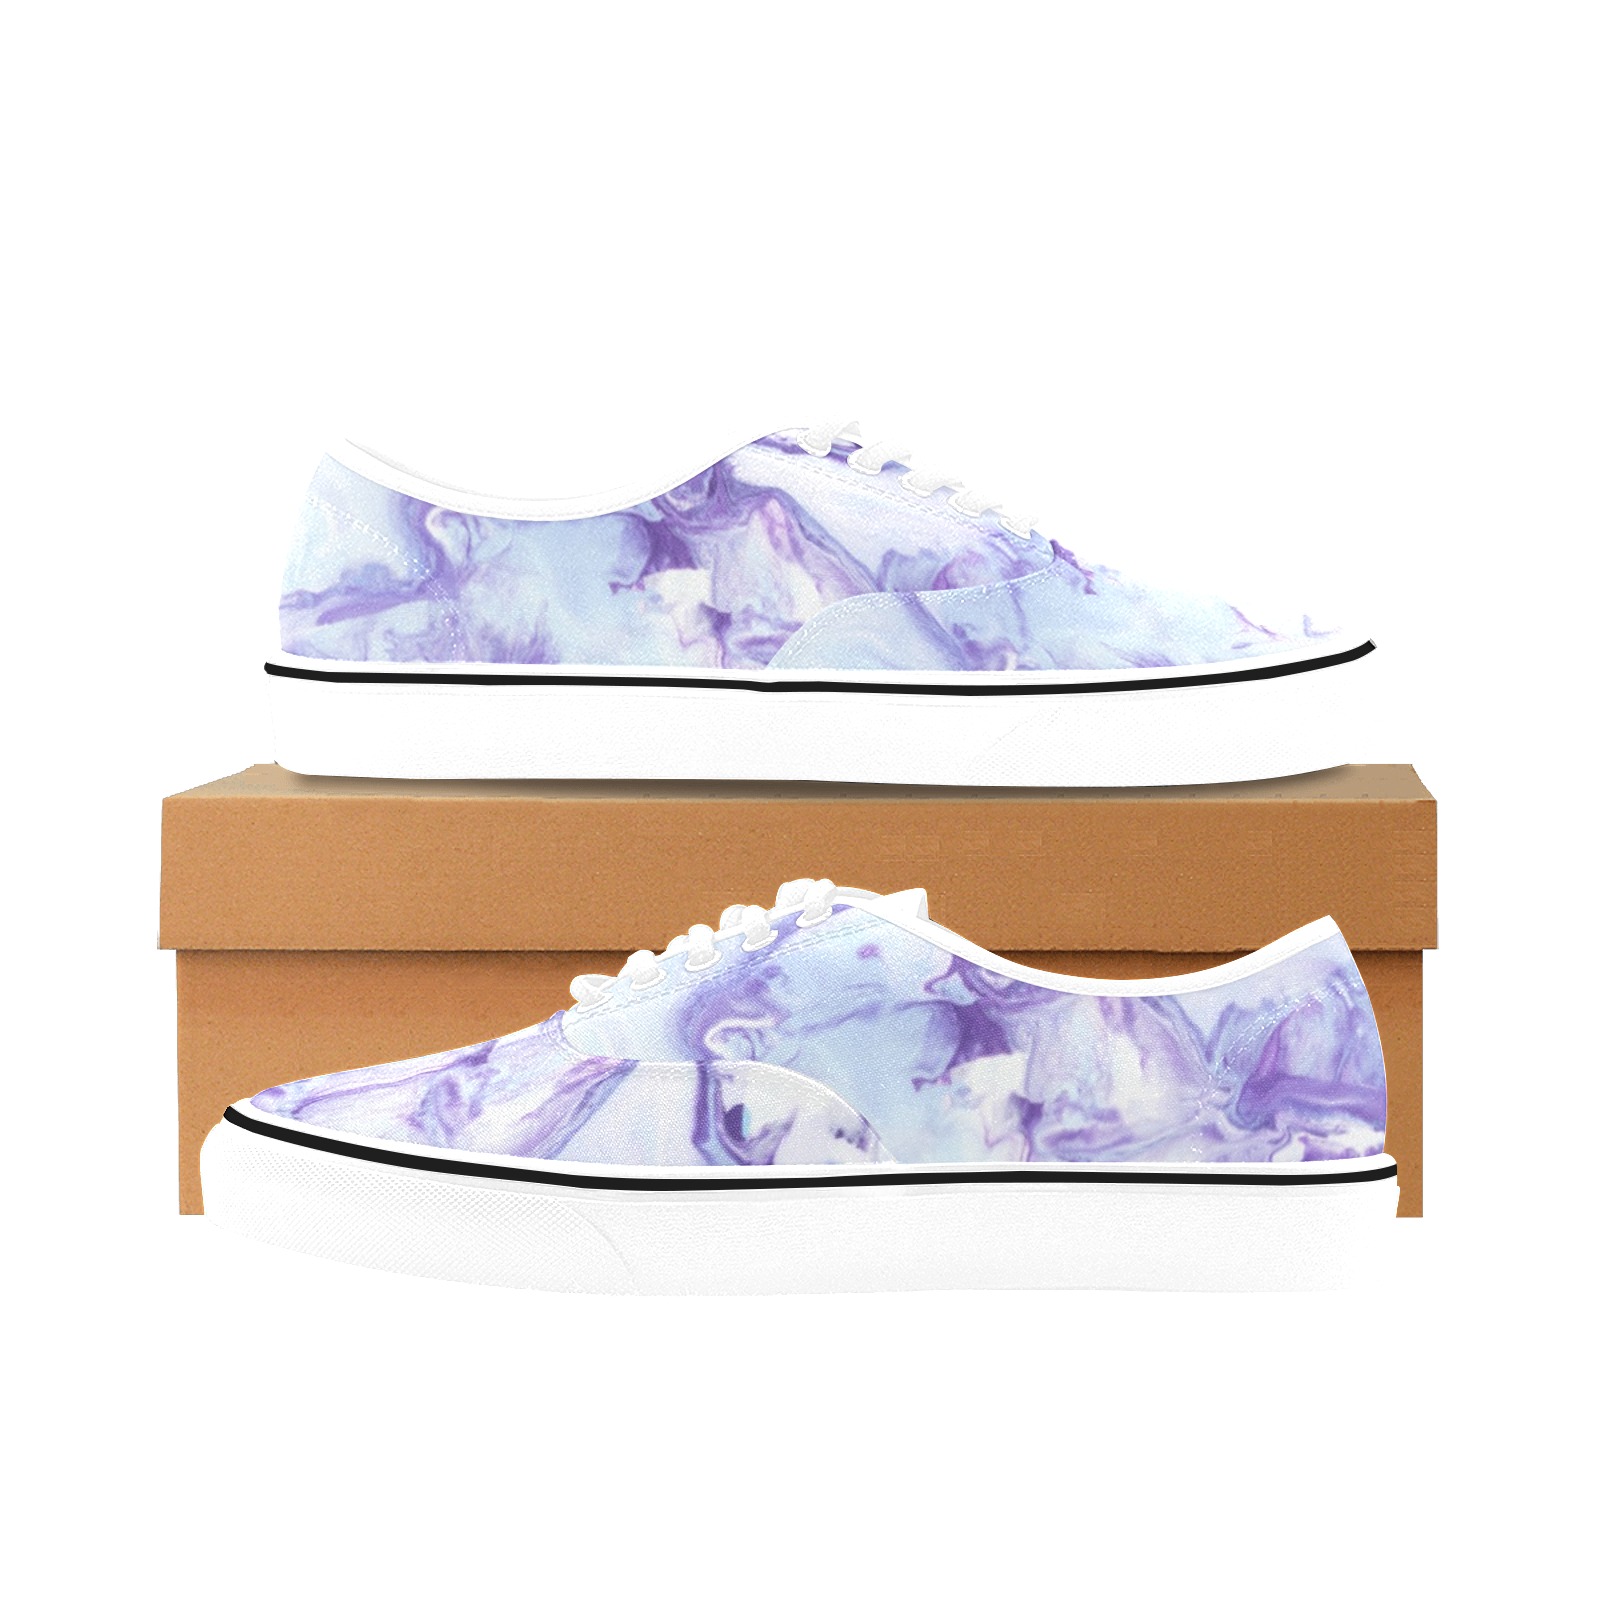 Lavender marbling Classic Women's Canvas Low Top Shoes (Model E001-4)